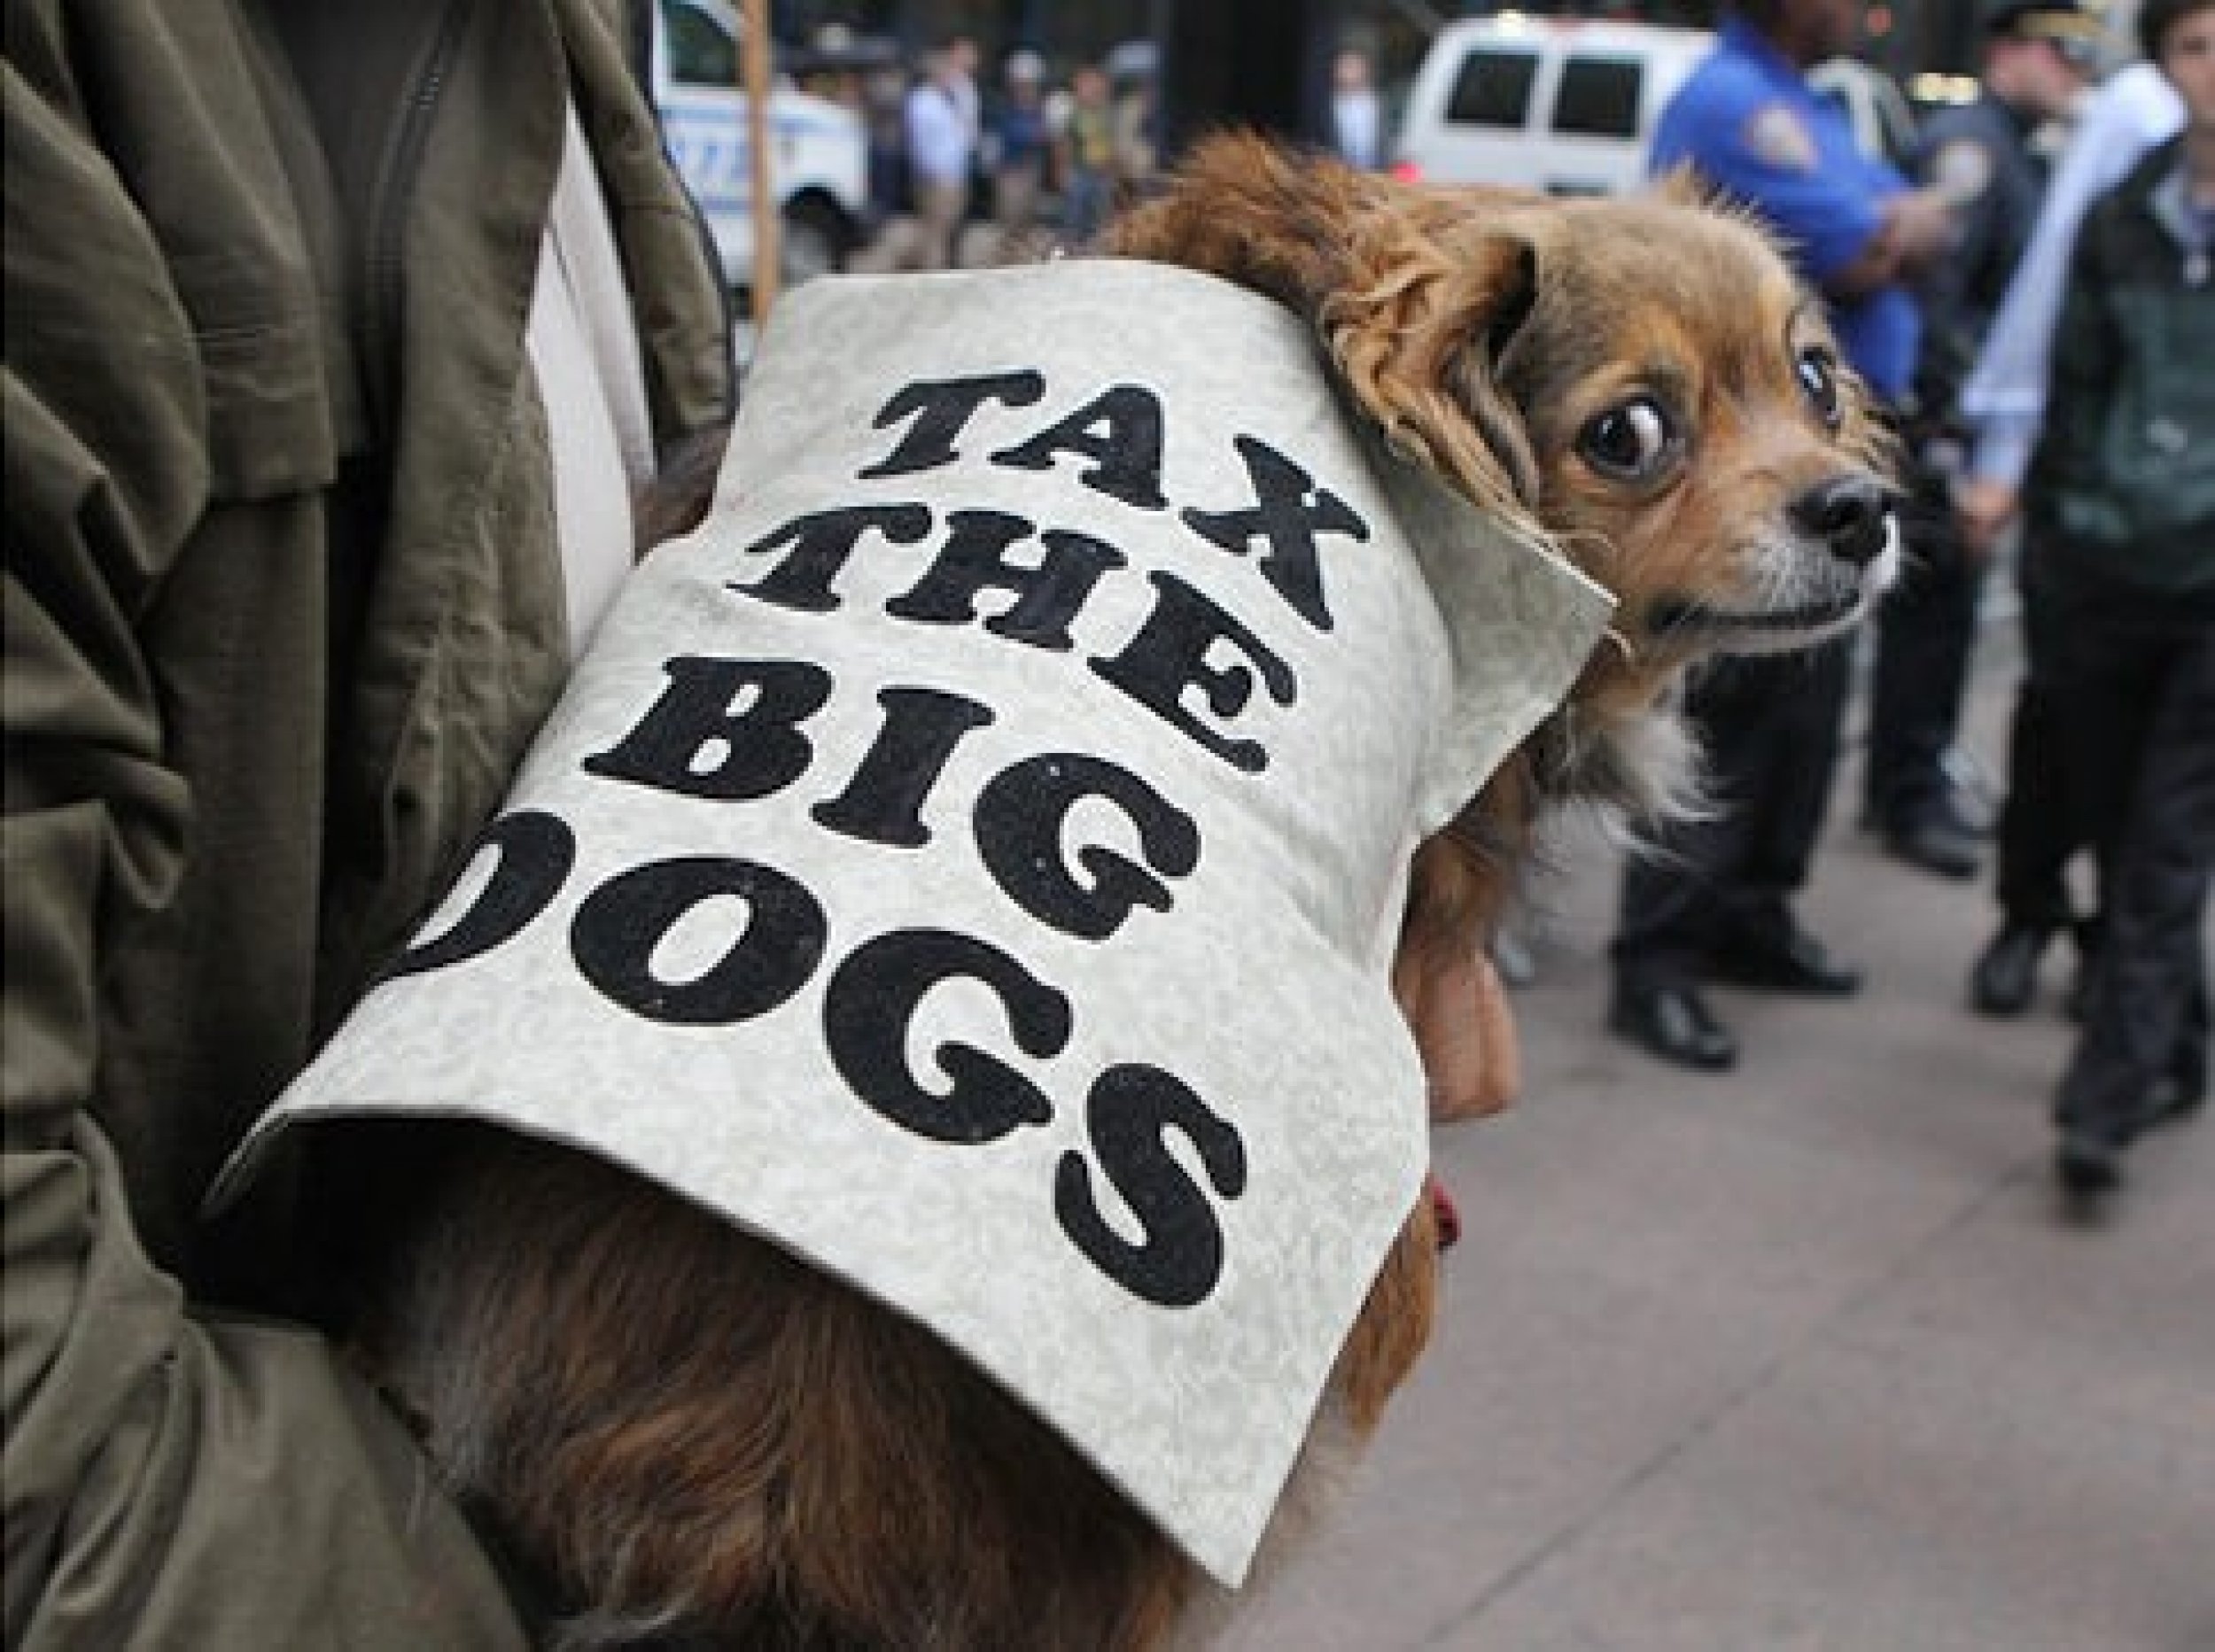 Tax the Big Dogs